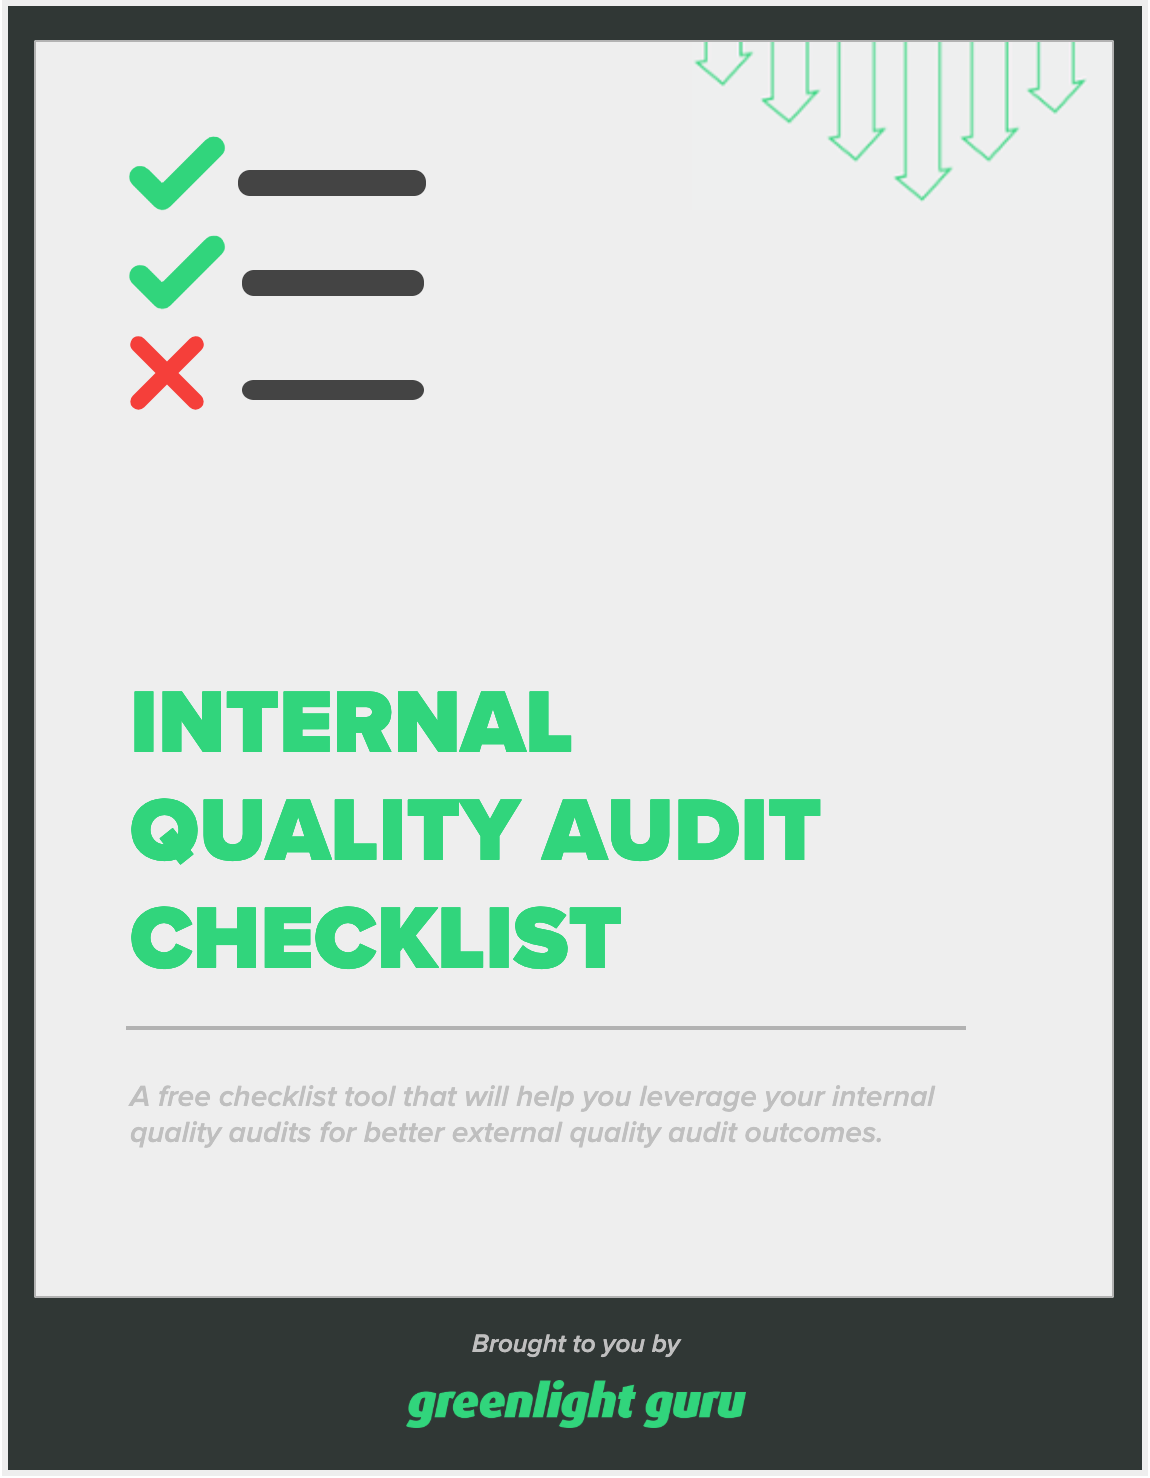 iso 13485 internal audit checklist free